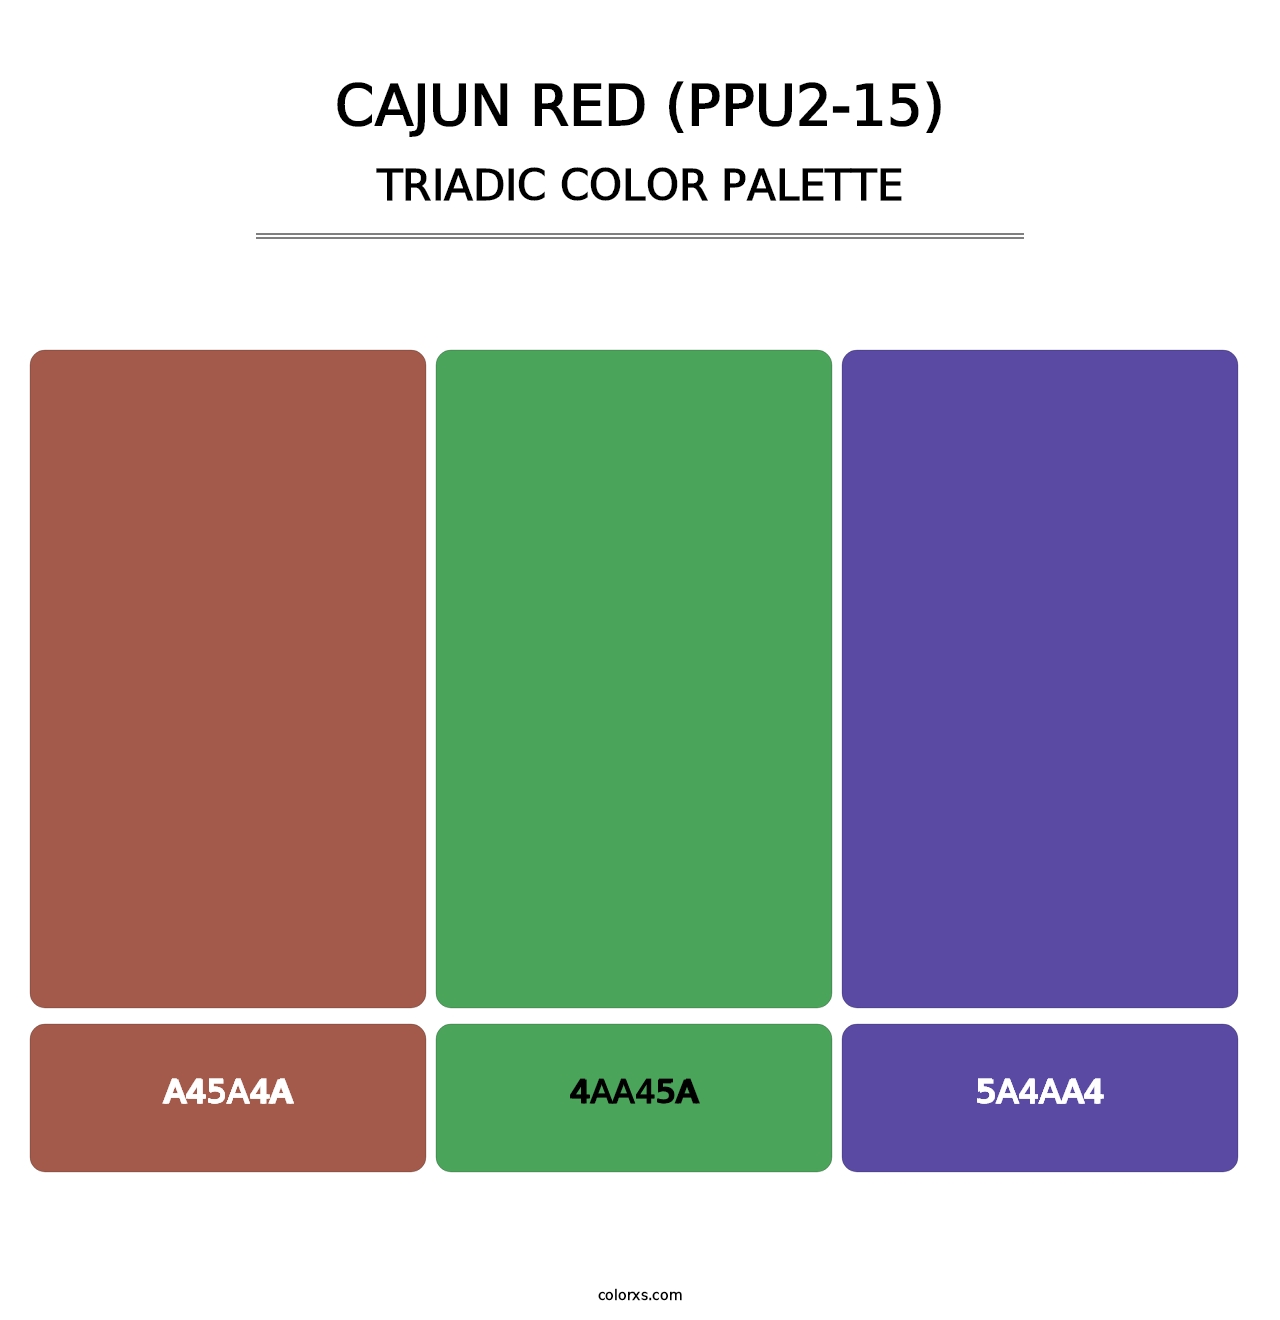 Cajun Red (PPU2-15) - Triadic Color Palette